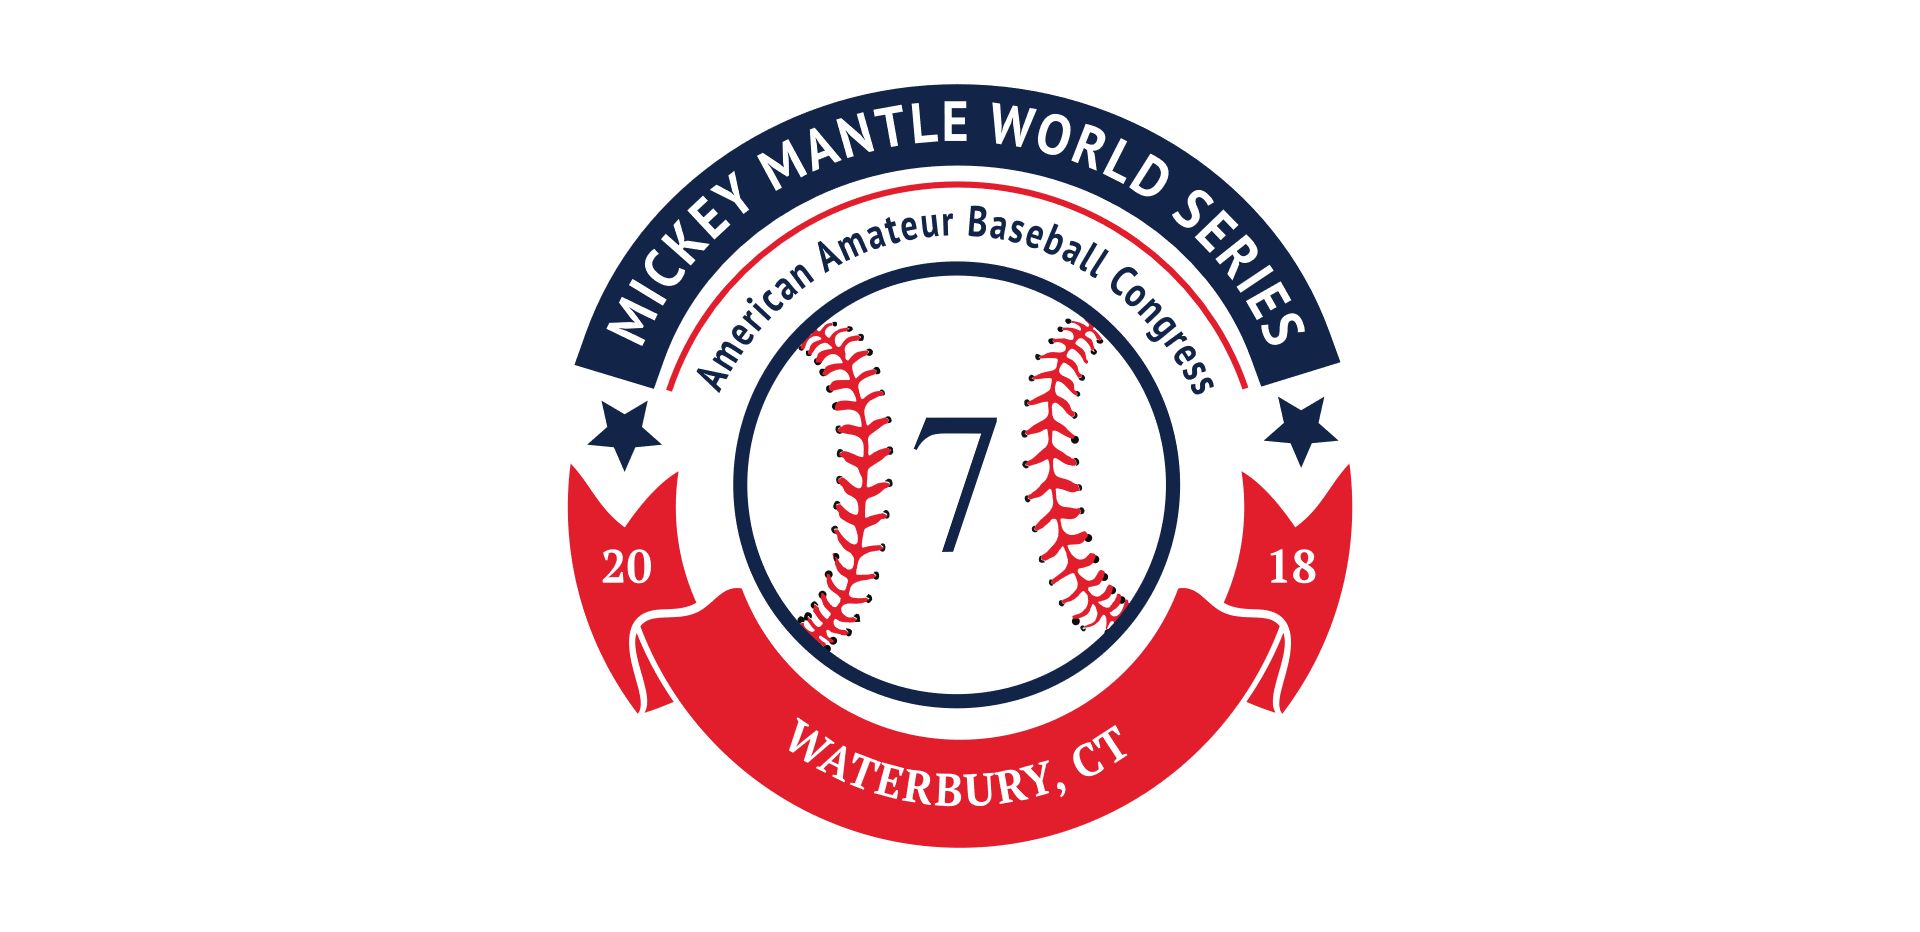 Mickey Mantle World Series 2018